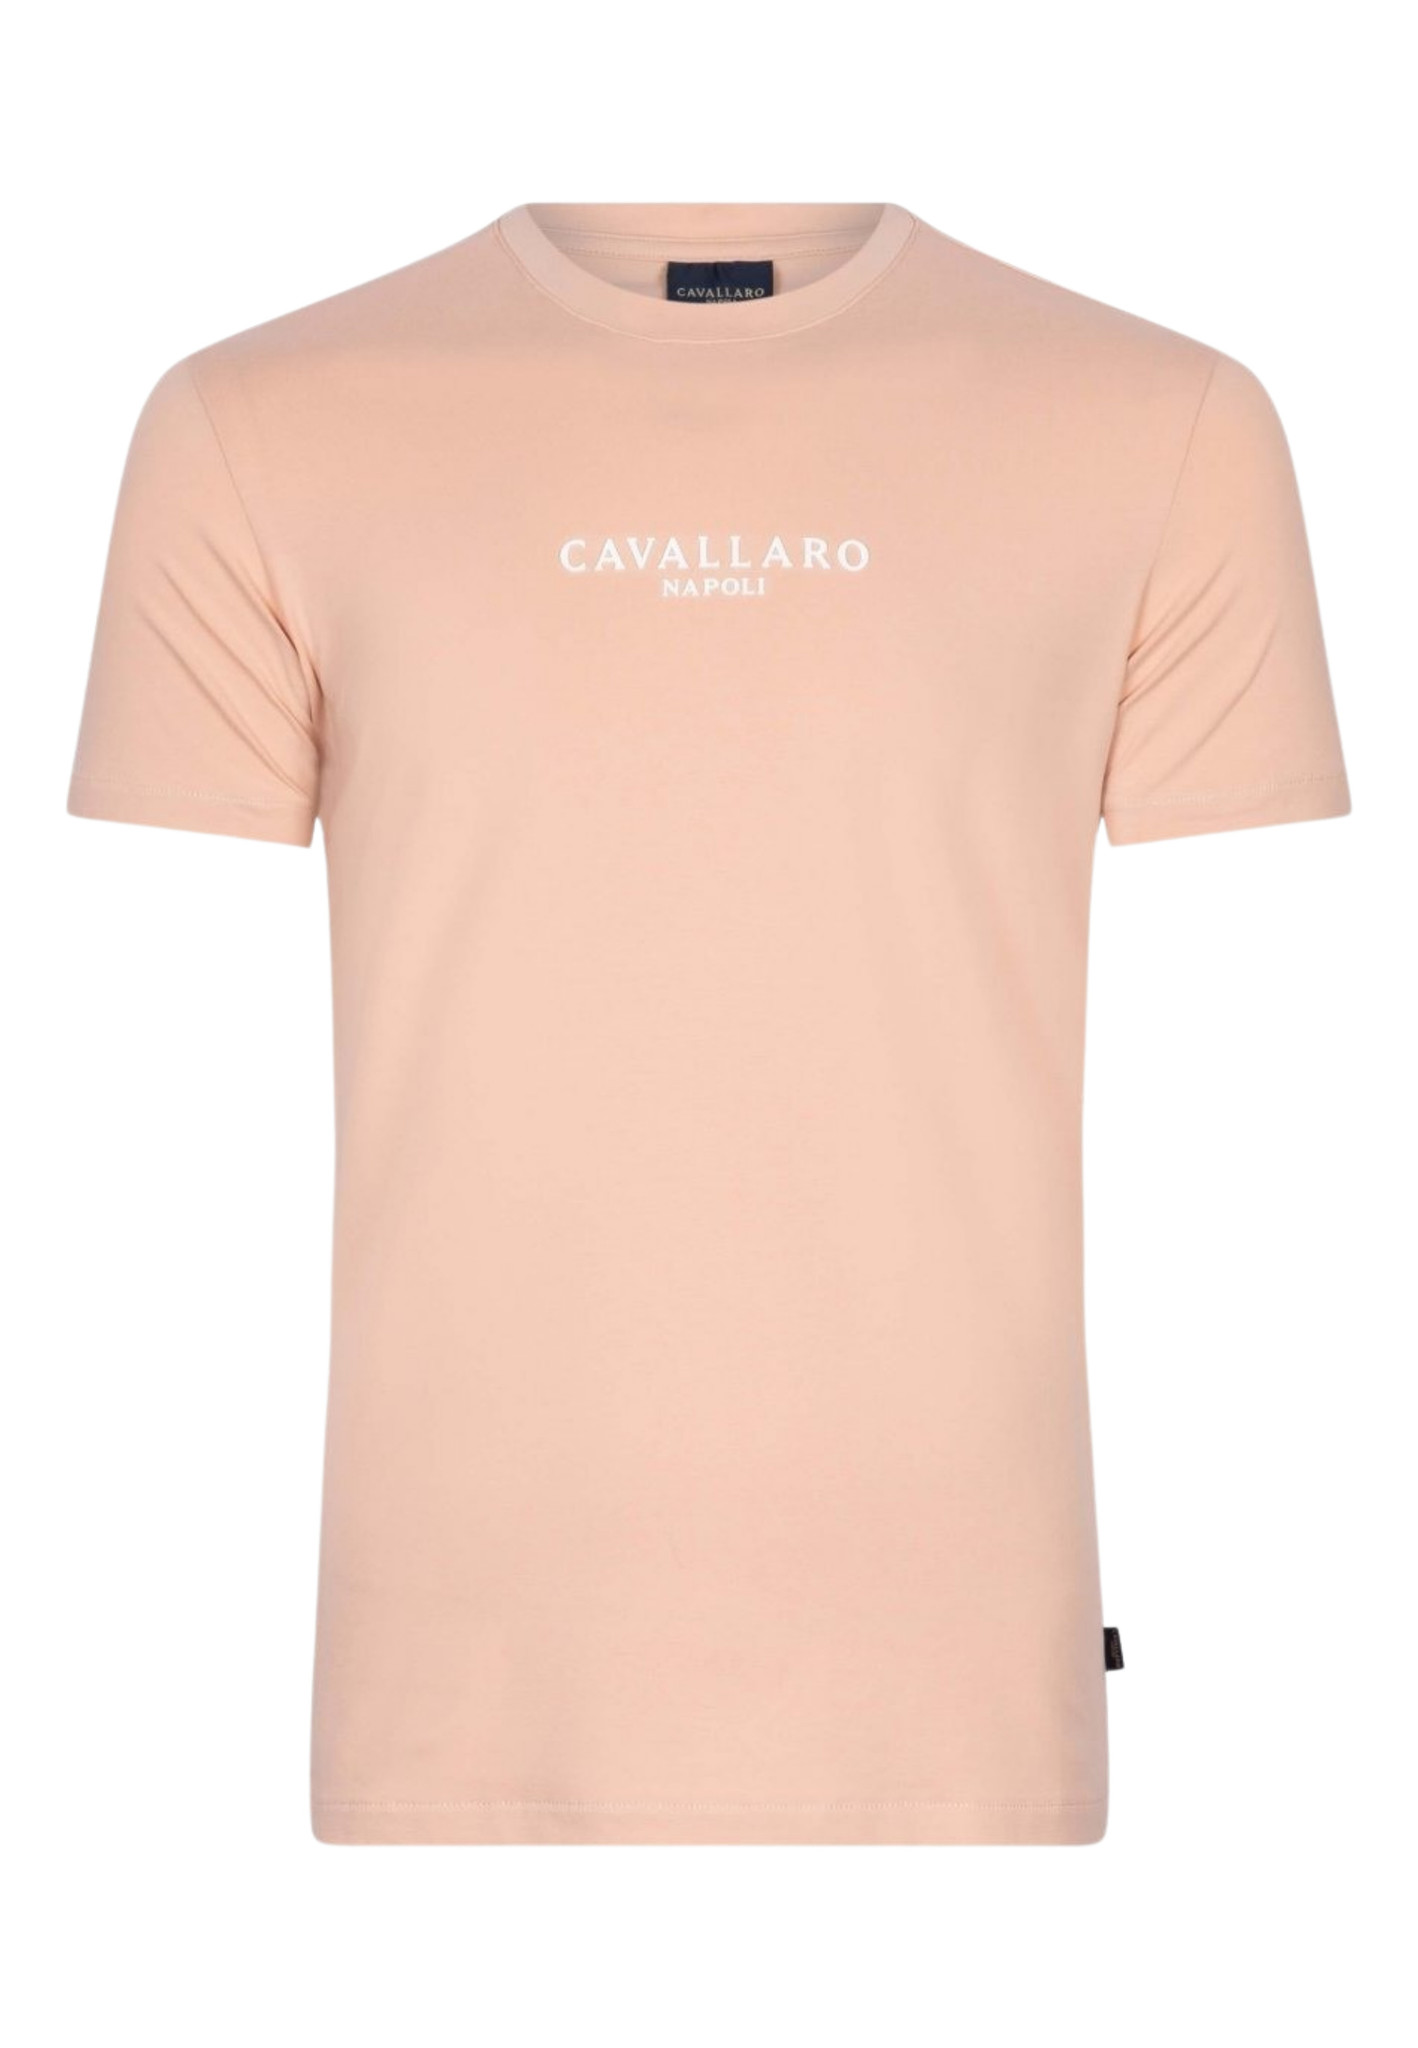 Cavallaro t-shirts oud rose Heren maat XXL